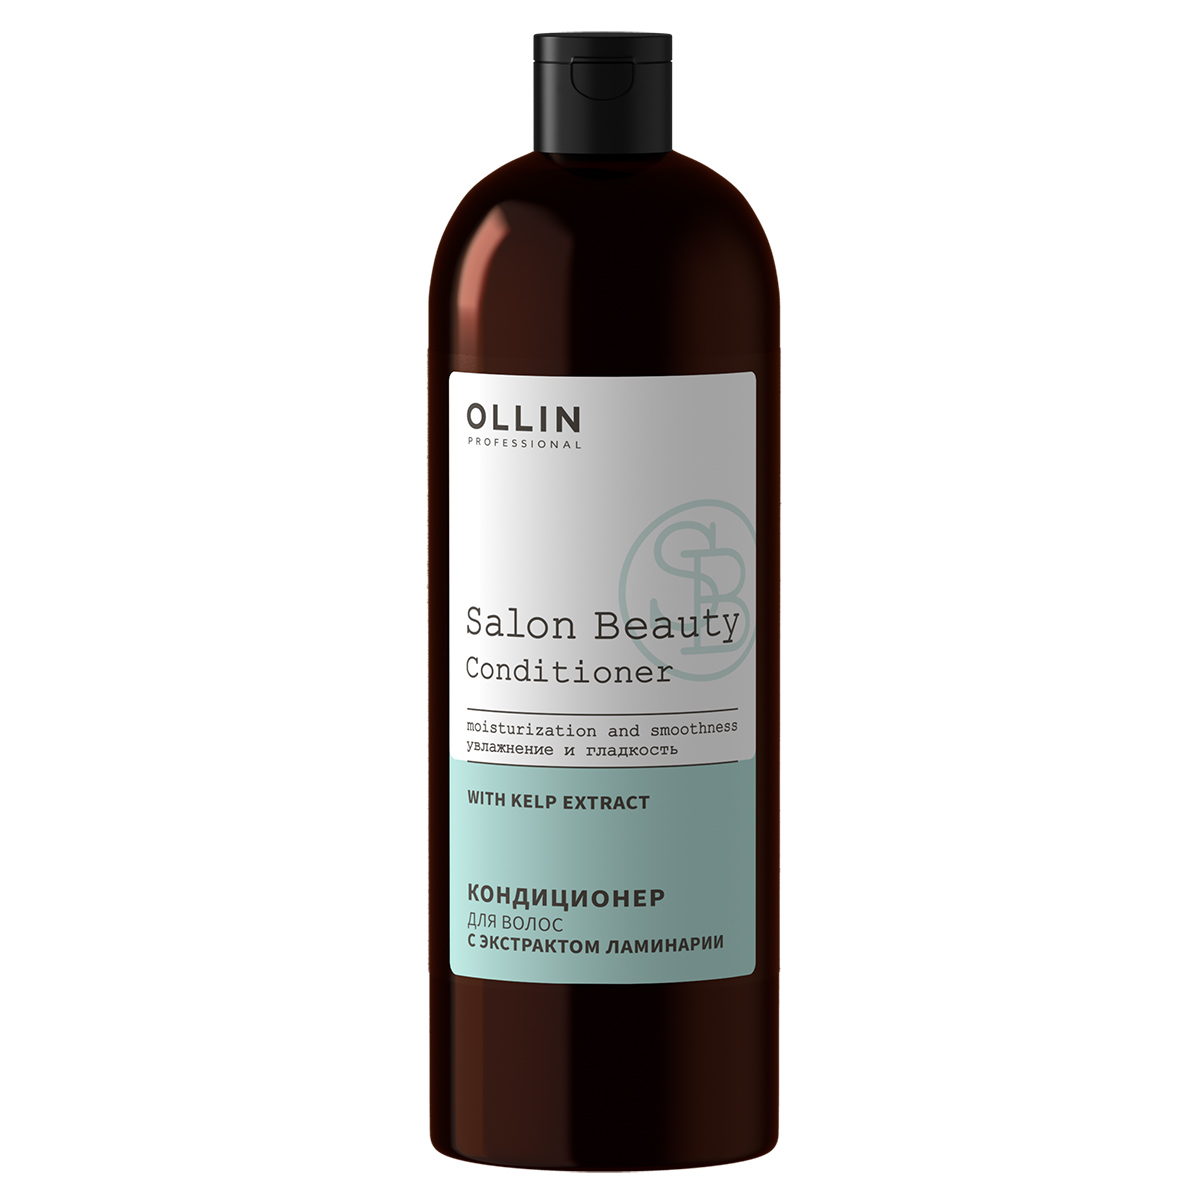 SALON BEAUTY Кондиционер для волос с экстрактом ламинарии, 1000мл, OLLIN - фото 1